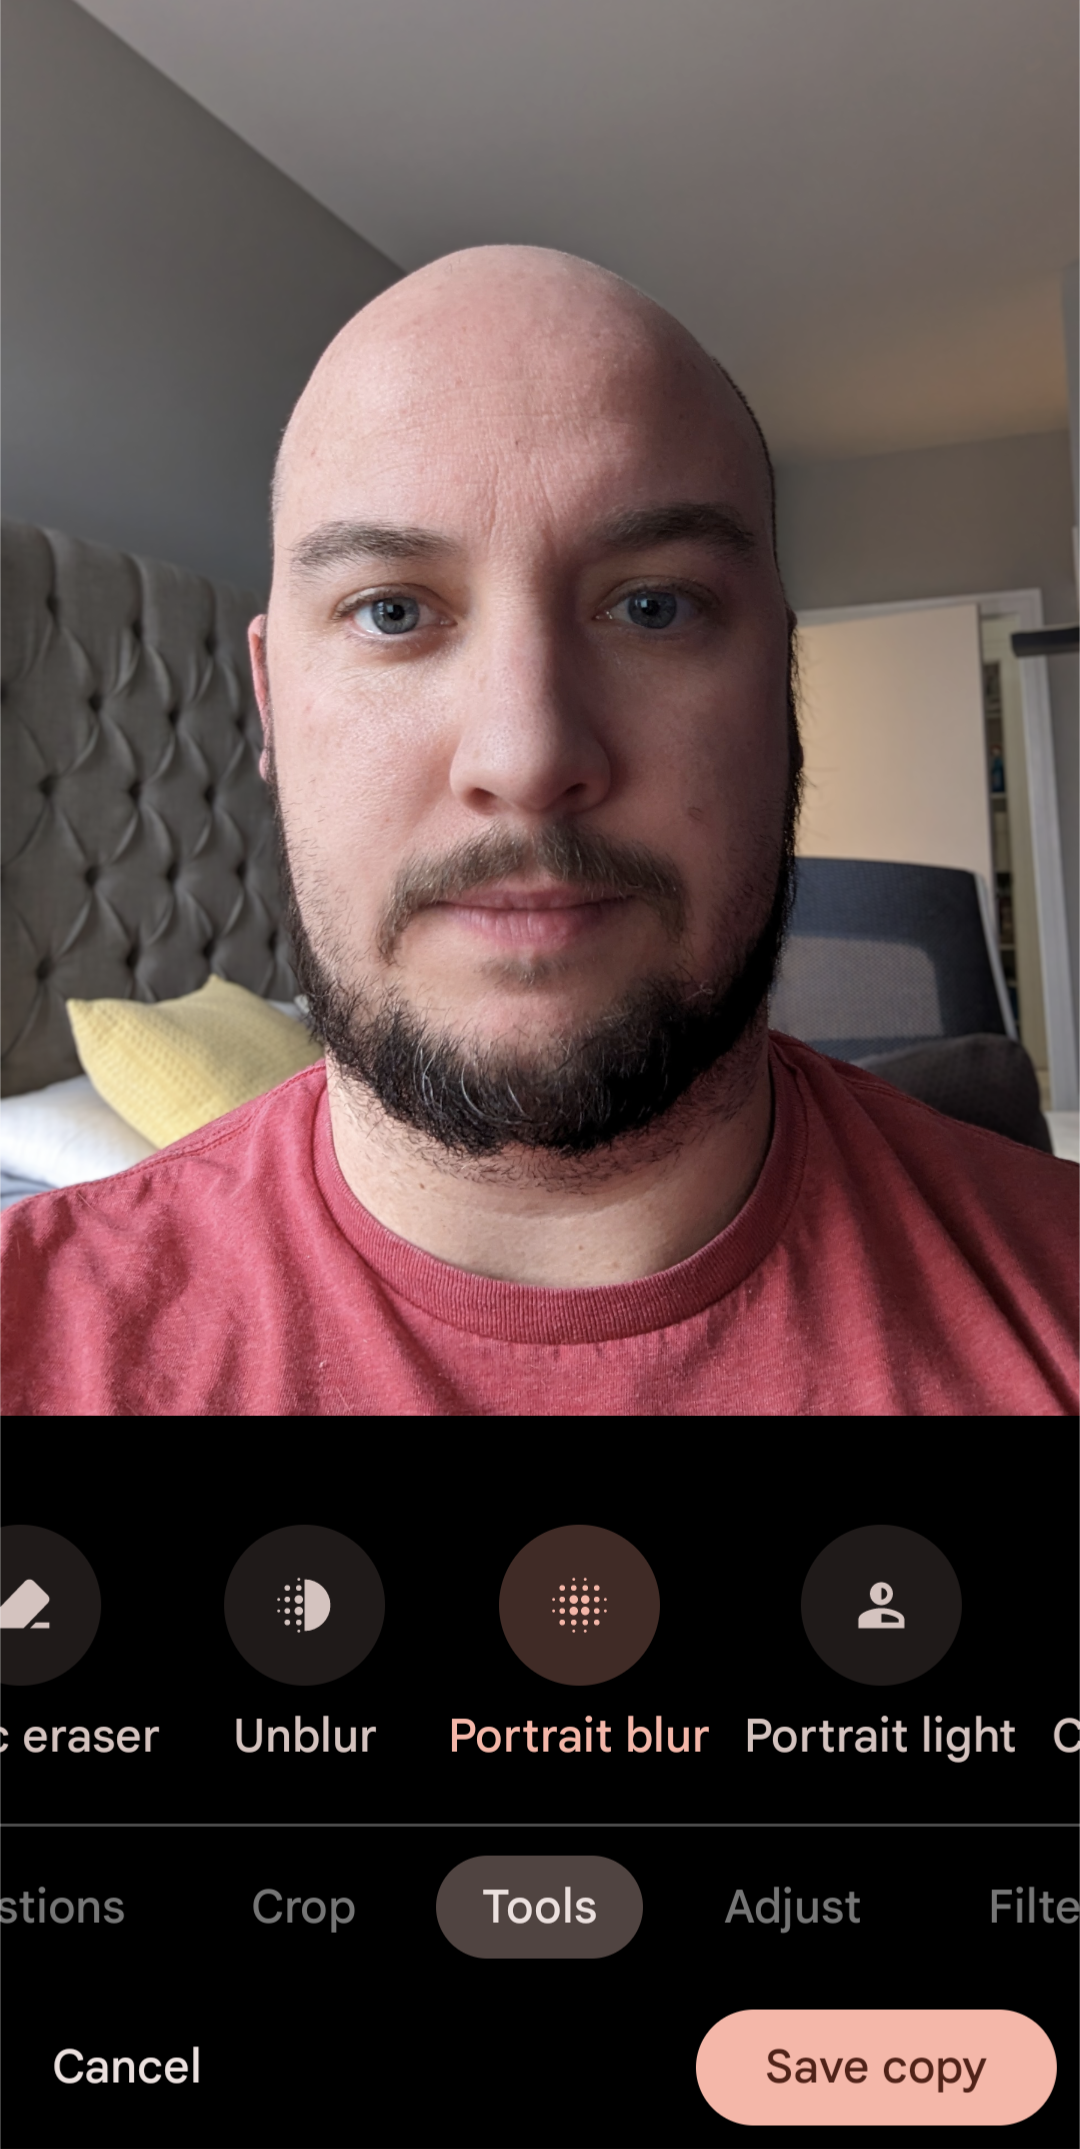 The Portrait blur tool in the Google Camera app